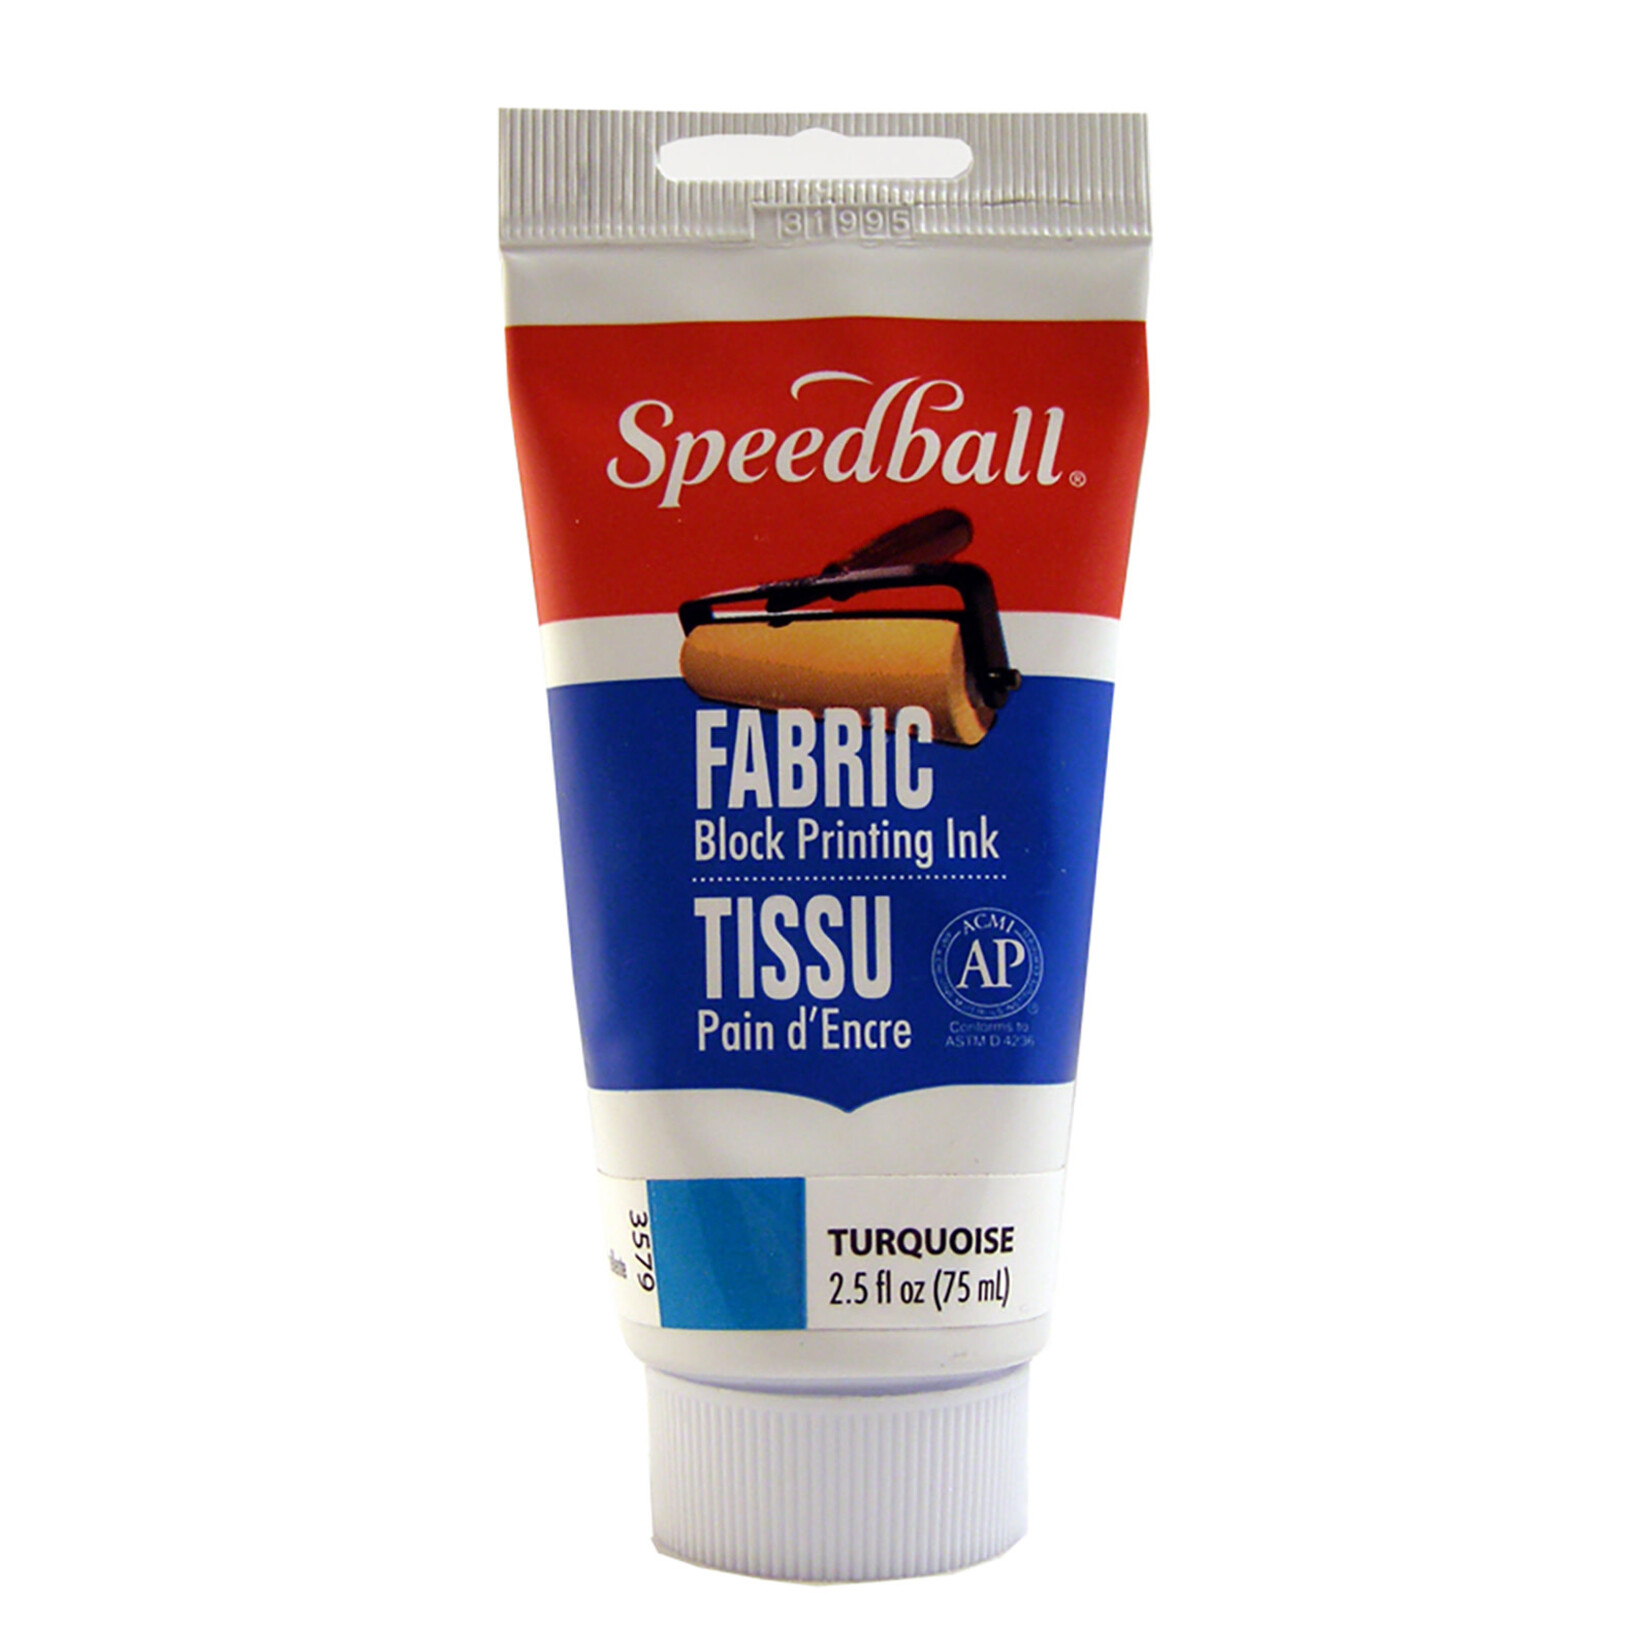 Speedball Fabric Block Printing Ink Turquoise 2.5 oz.